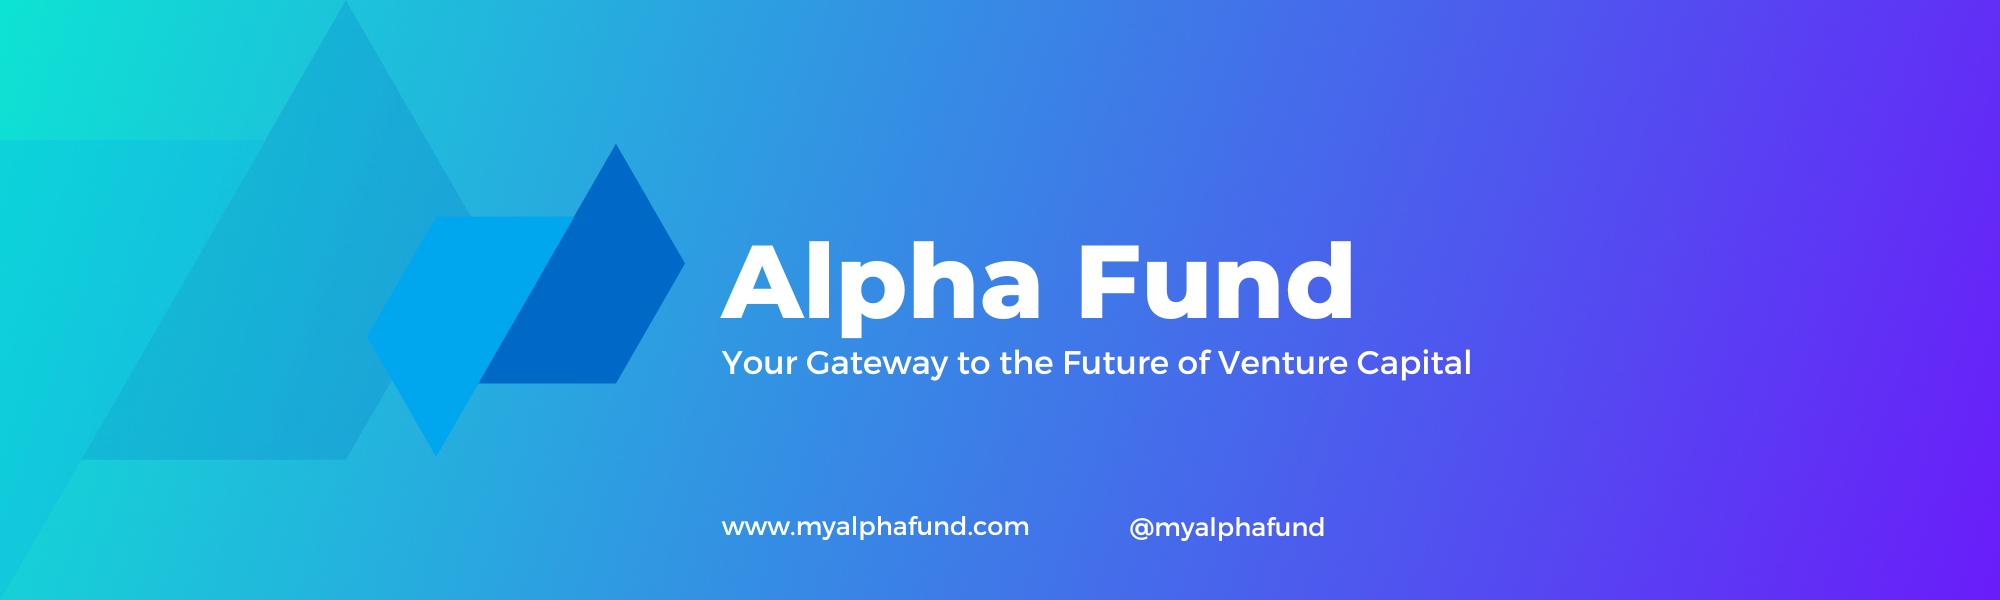 Alpha Fund LinkedIn Banner